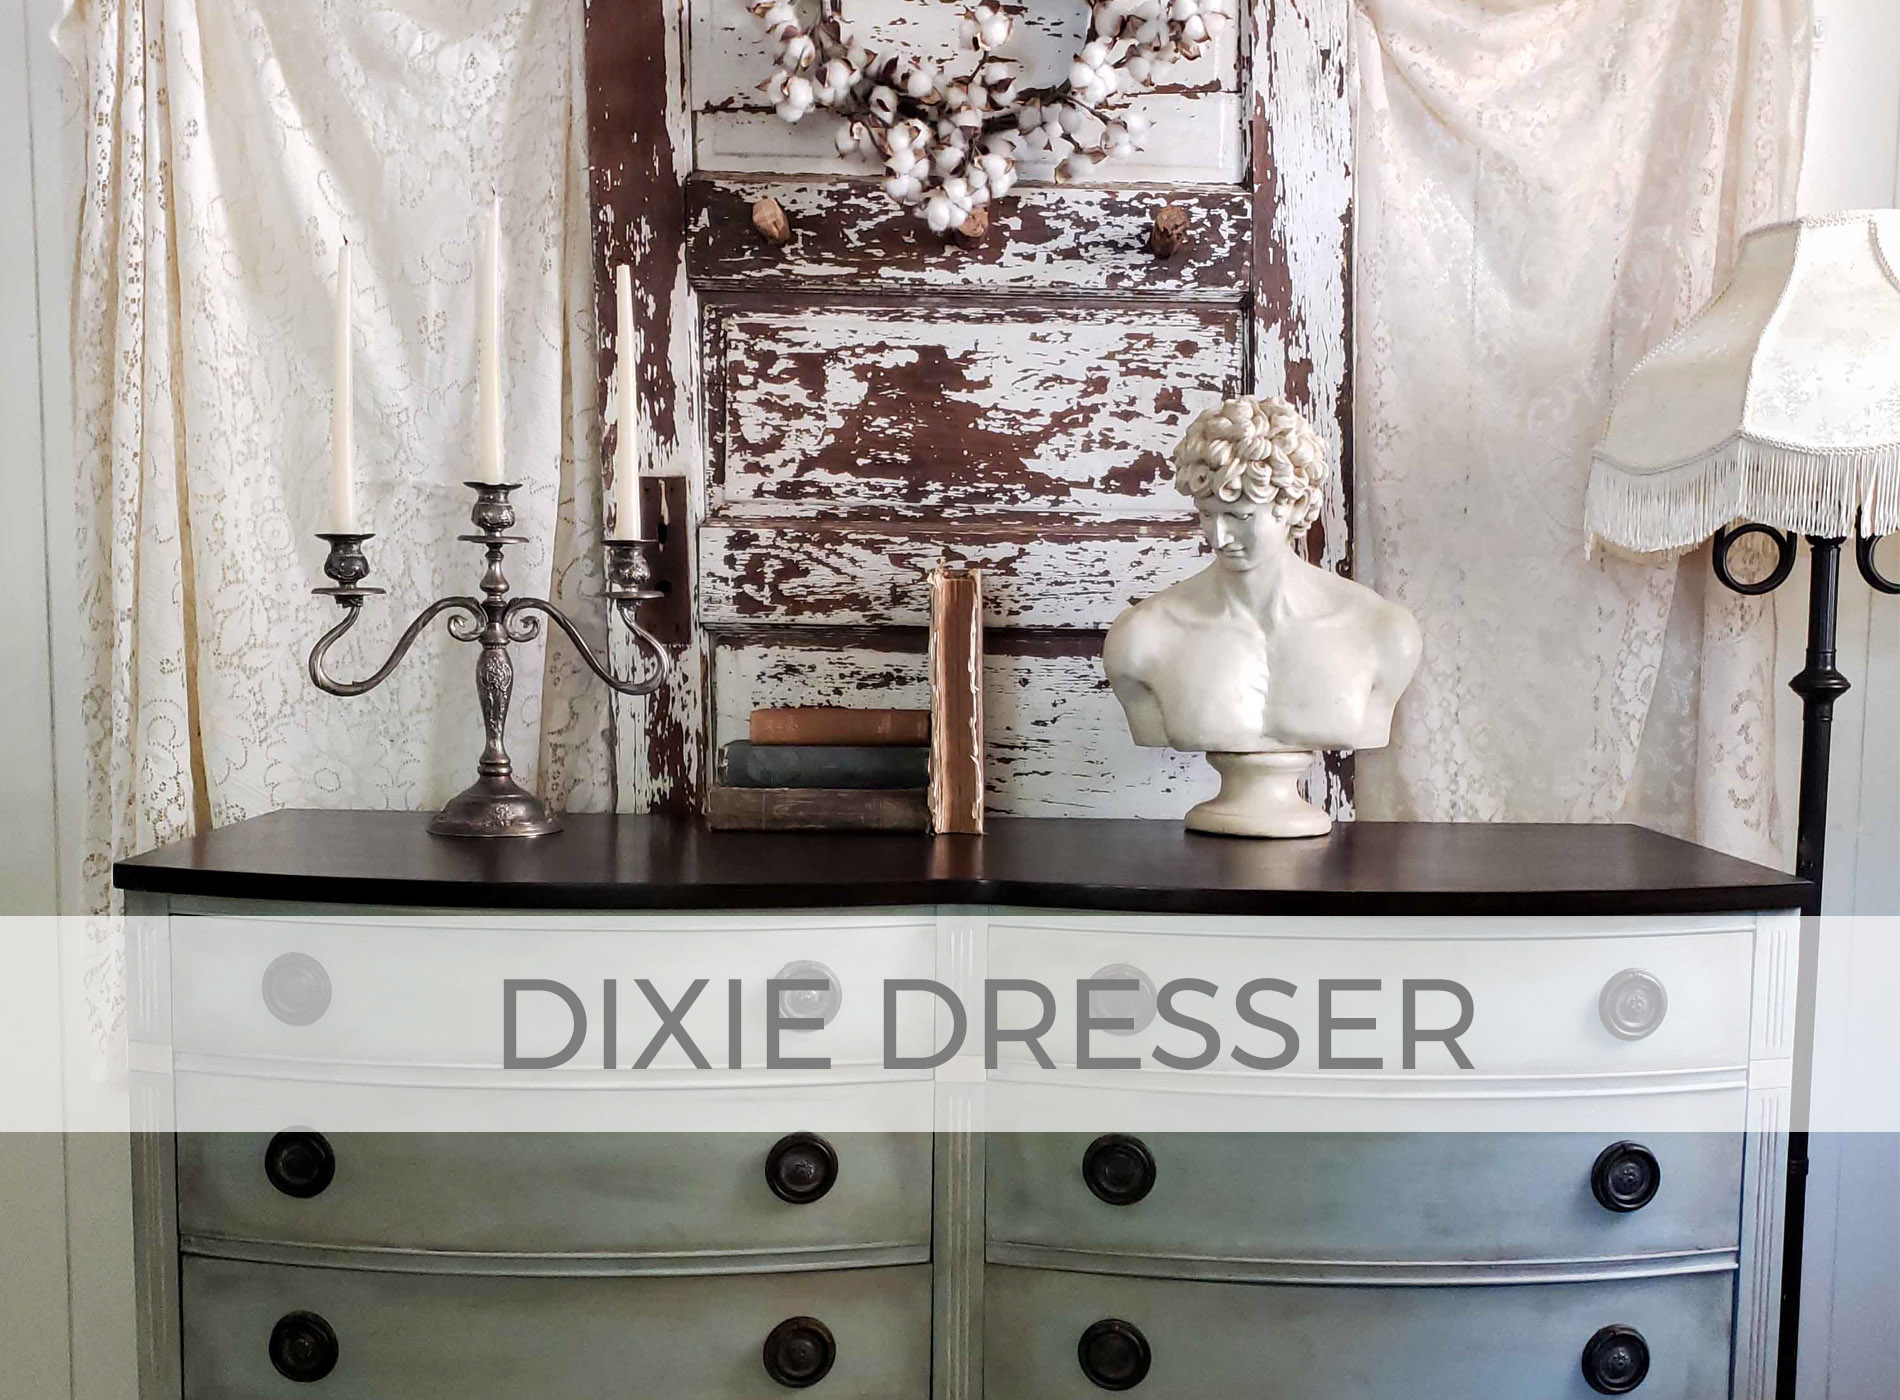 Vintage Dixie Dresser by Larissa of Prodigal Pieces | prodigalpieces.com #prodigalpieces